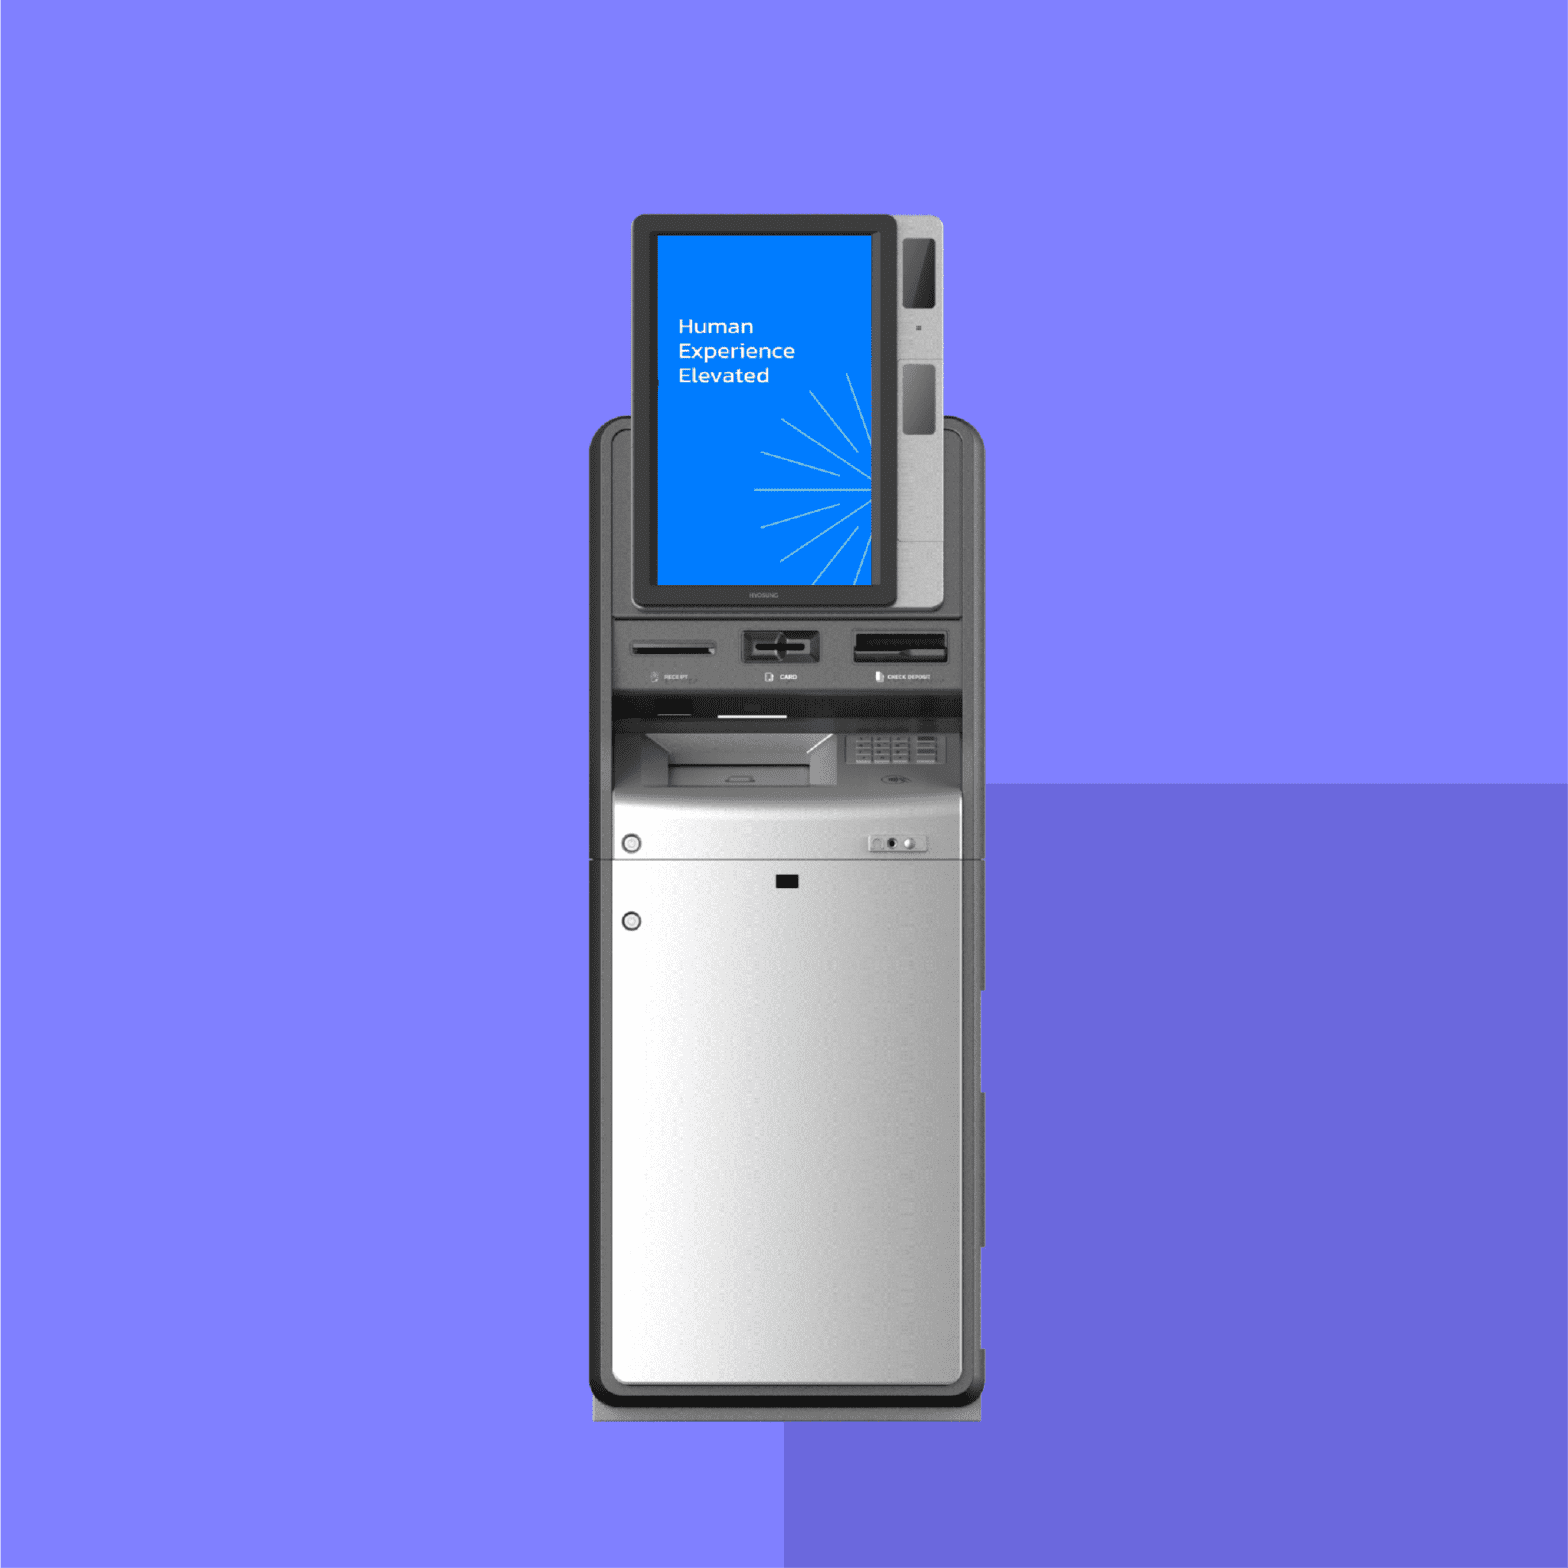 Image of Hyosung 8L (MX8200QTN), High capacity cash recycling lobby ATM